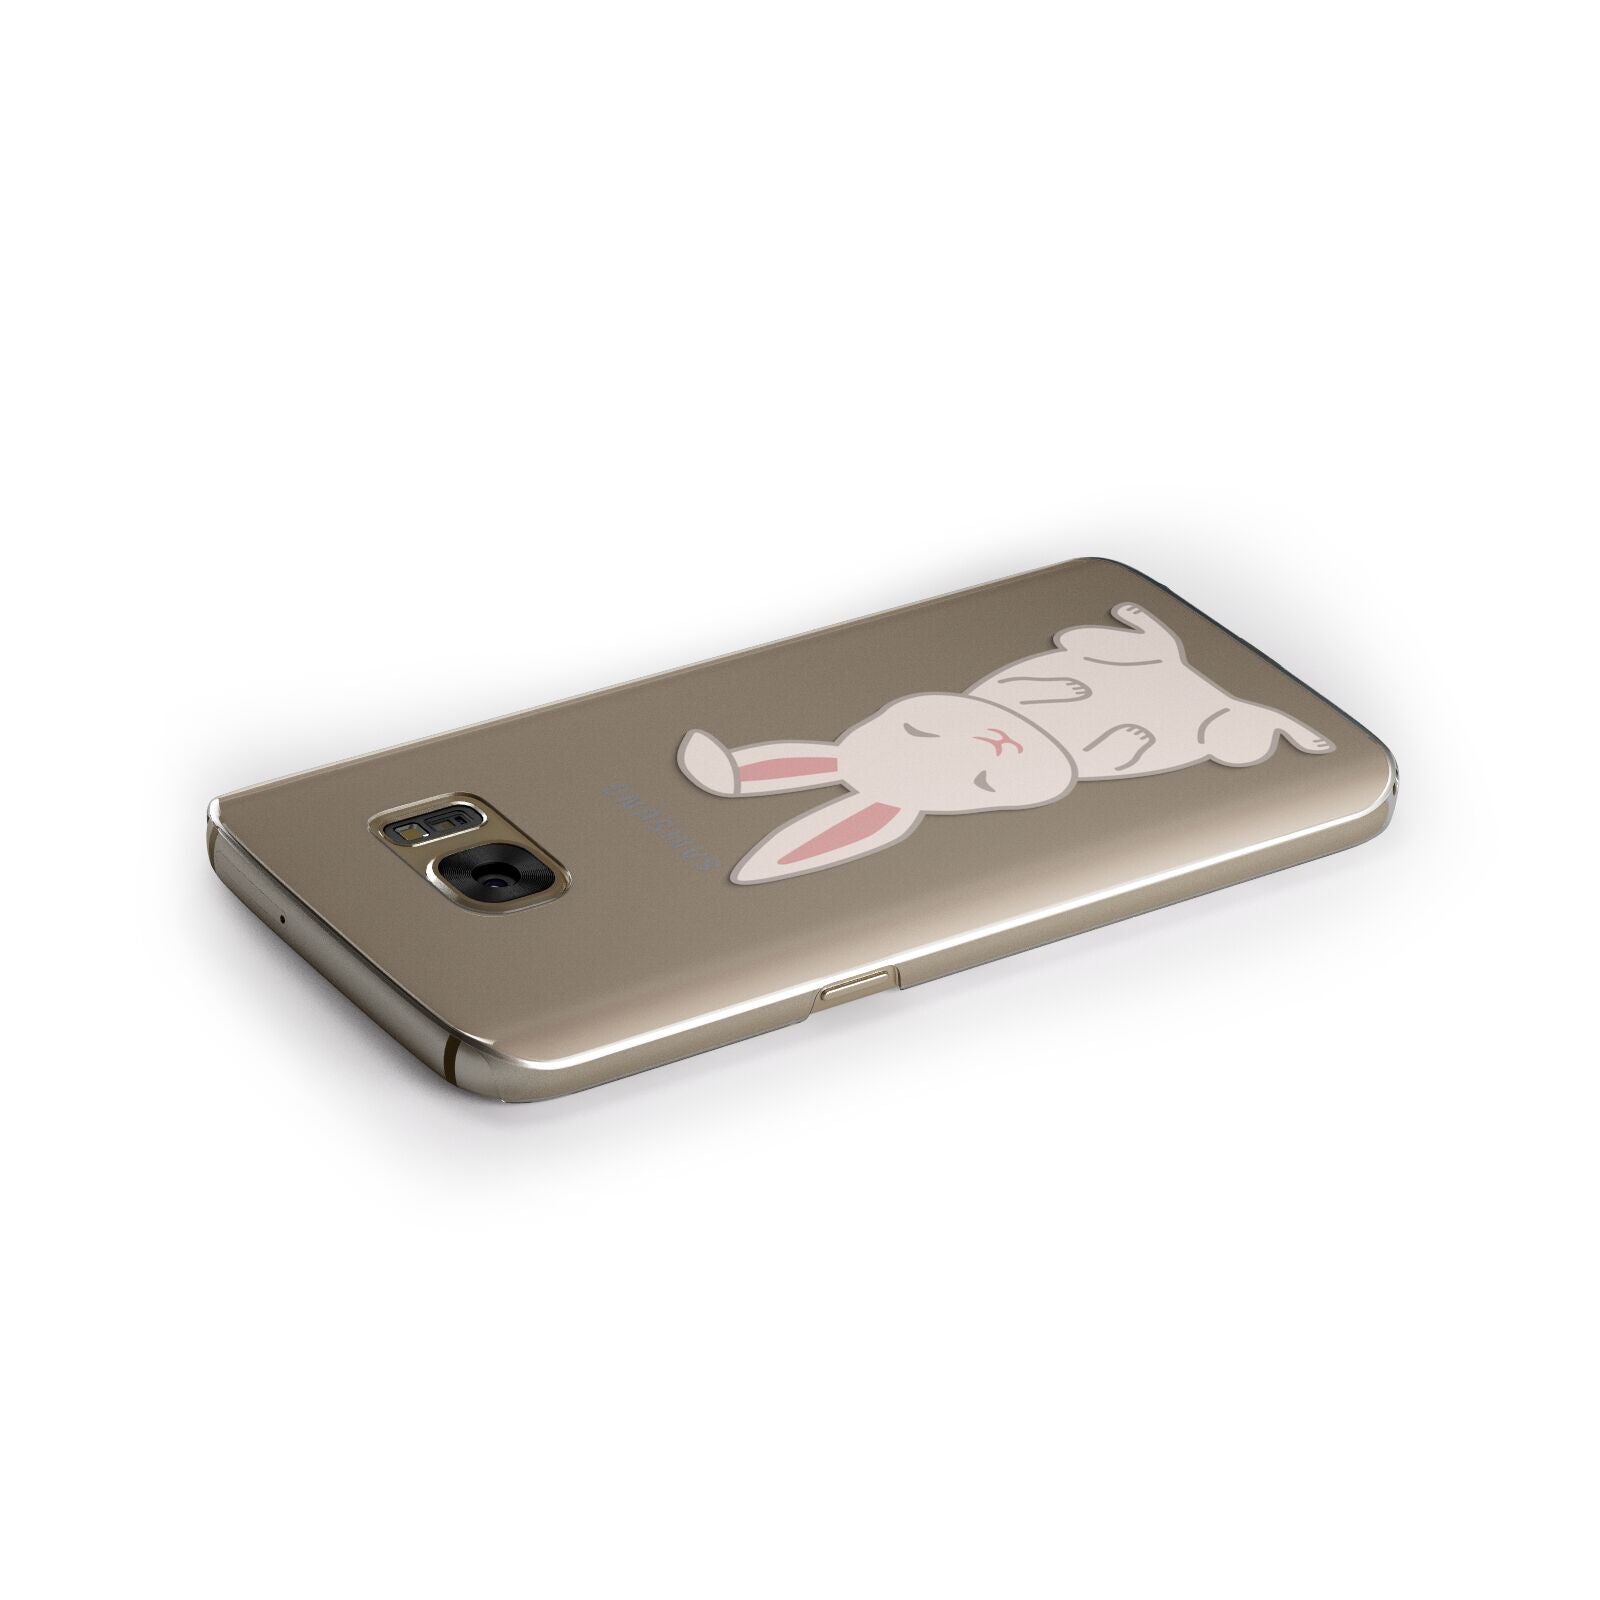 Bunny Samsung Galaxy Case Side Close Up